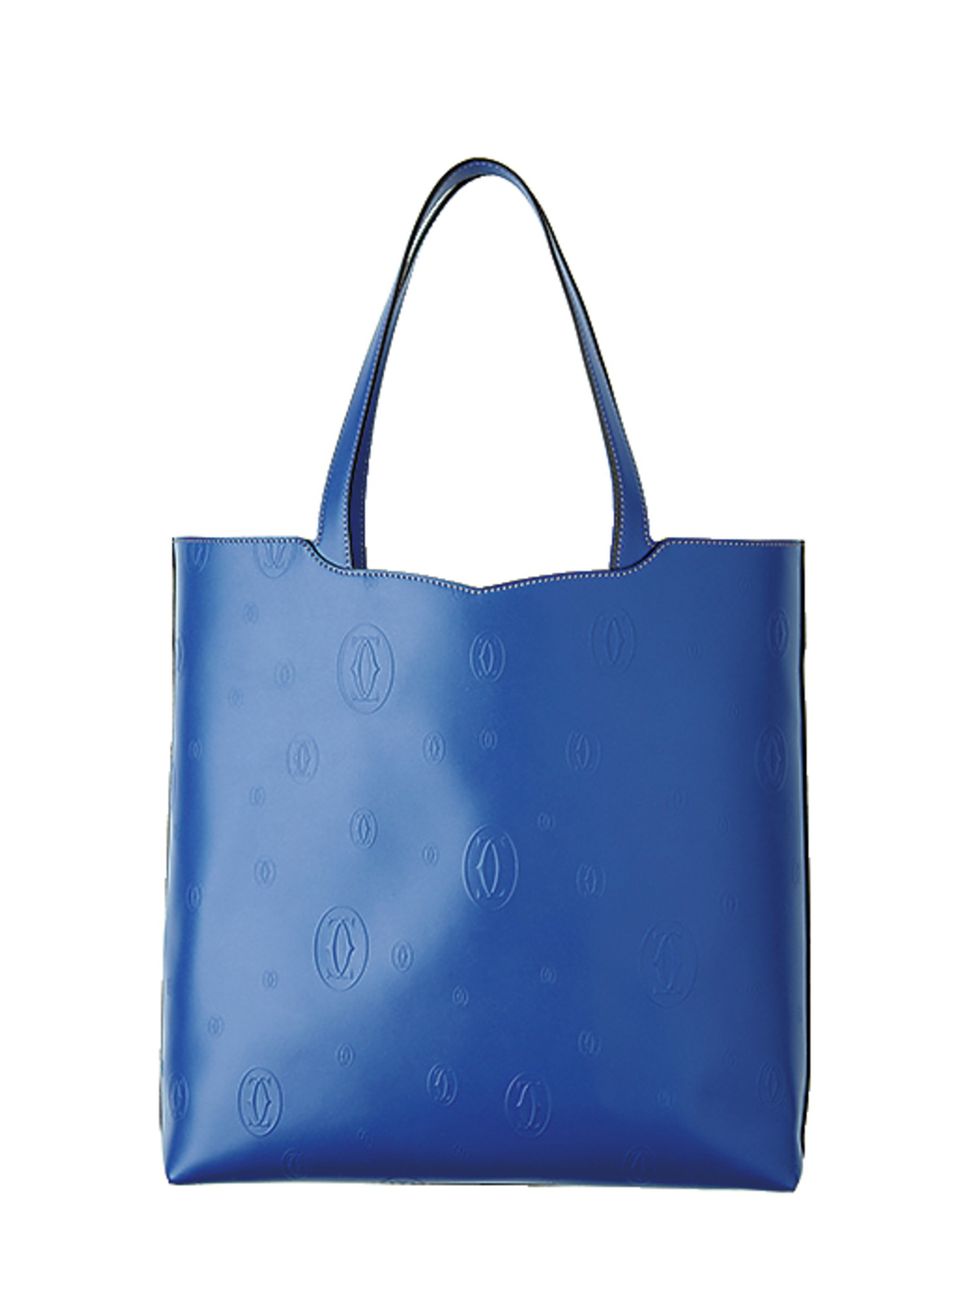 Blue, Bag, Fashion accessory, Style, Electric blue, Luggage and bags, Shoulder bag, Azure, Tote bag, Handbag, 